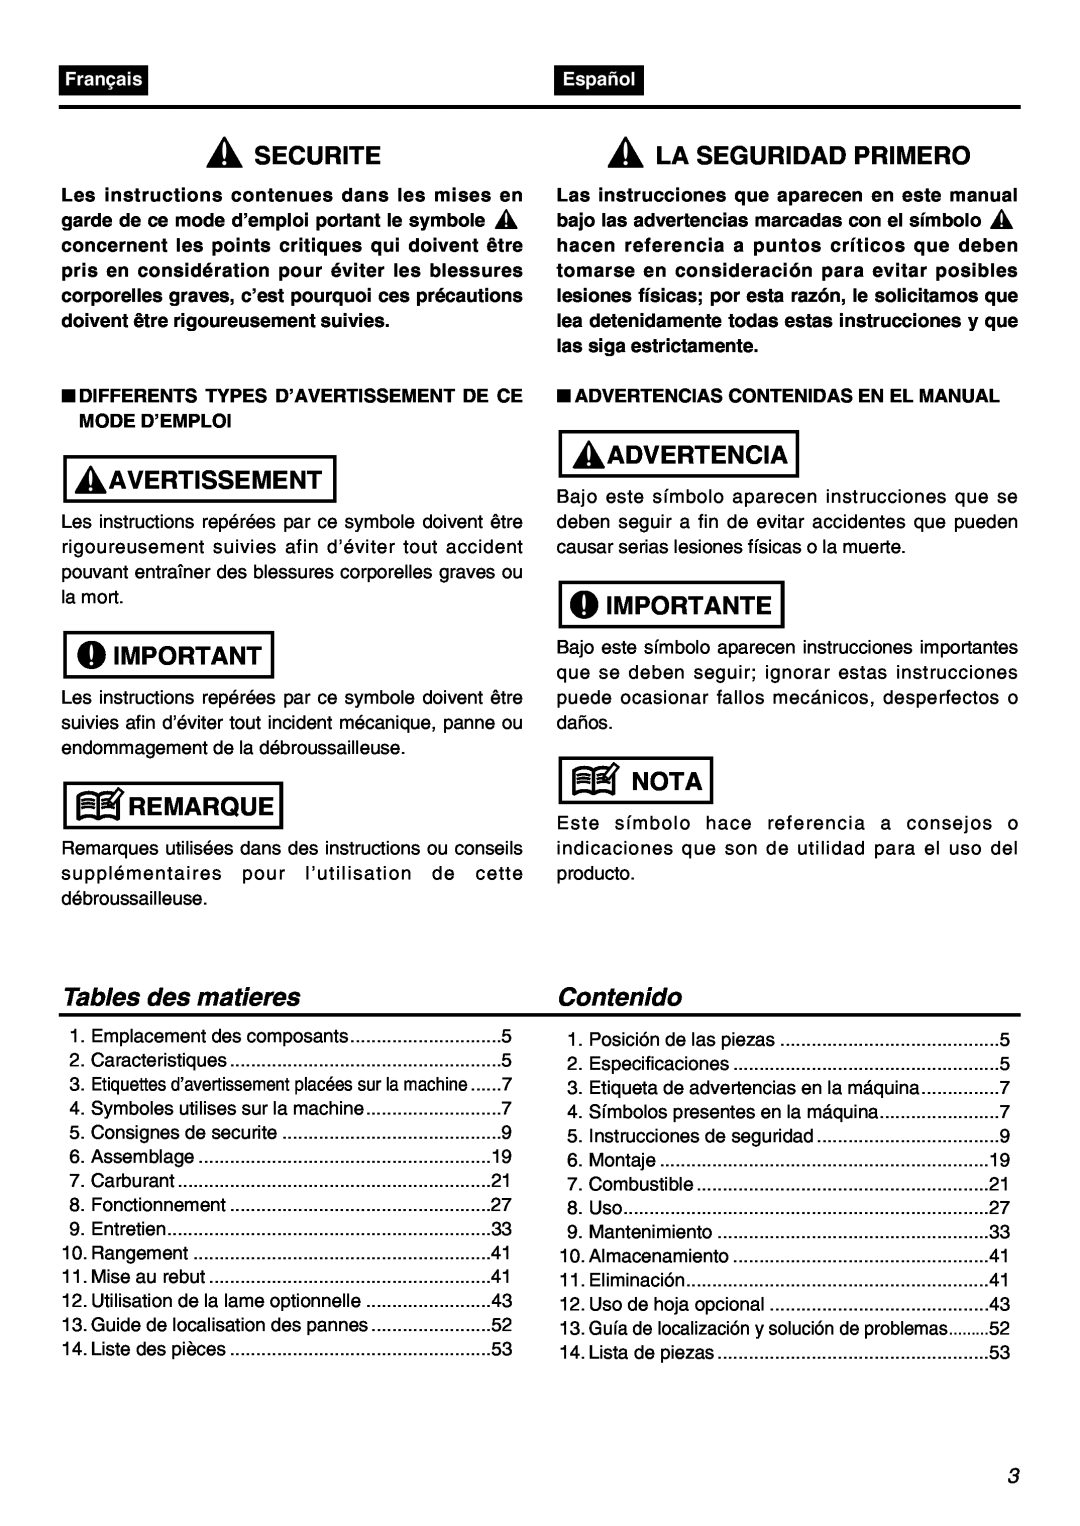 Zenoah TR2301S manual Securite, Avertissement, Remarque, Advertencia, Importante, Nota, Tables des matieres, Contenido 